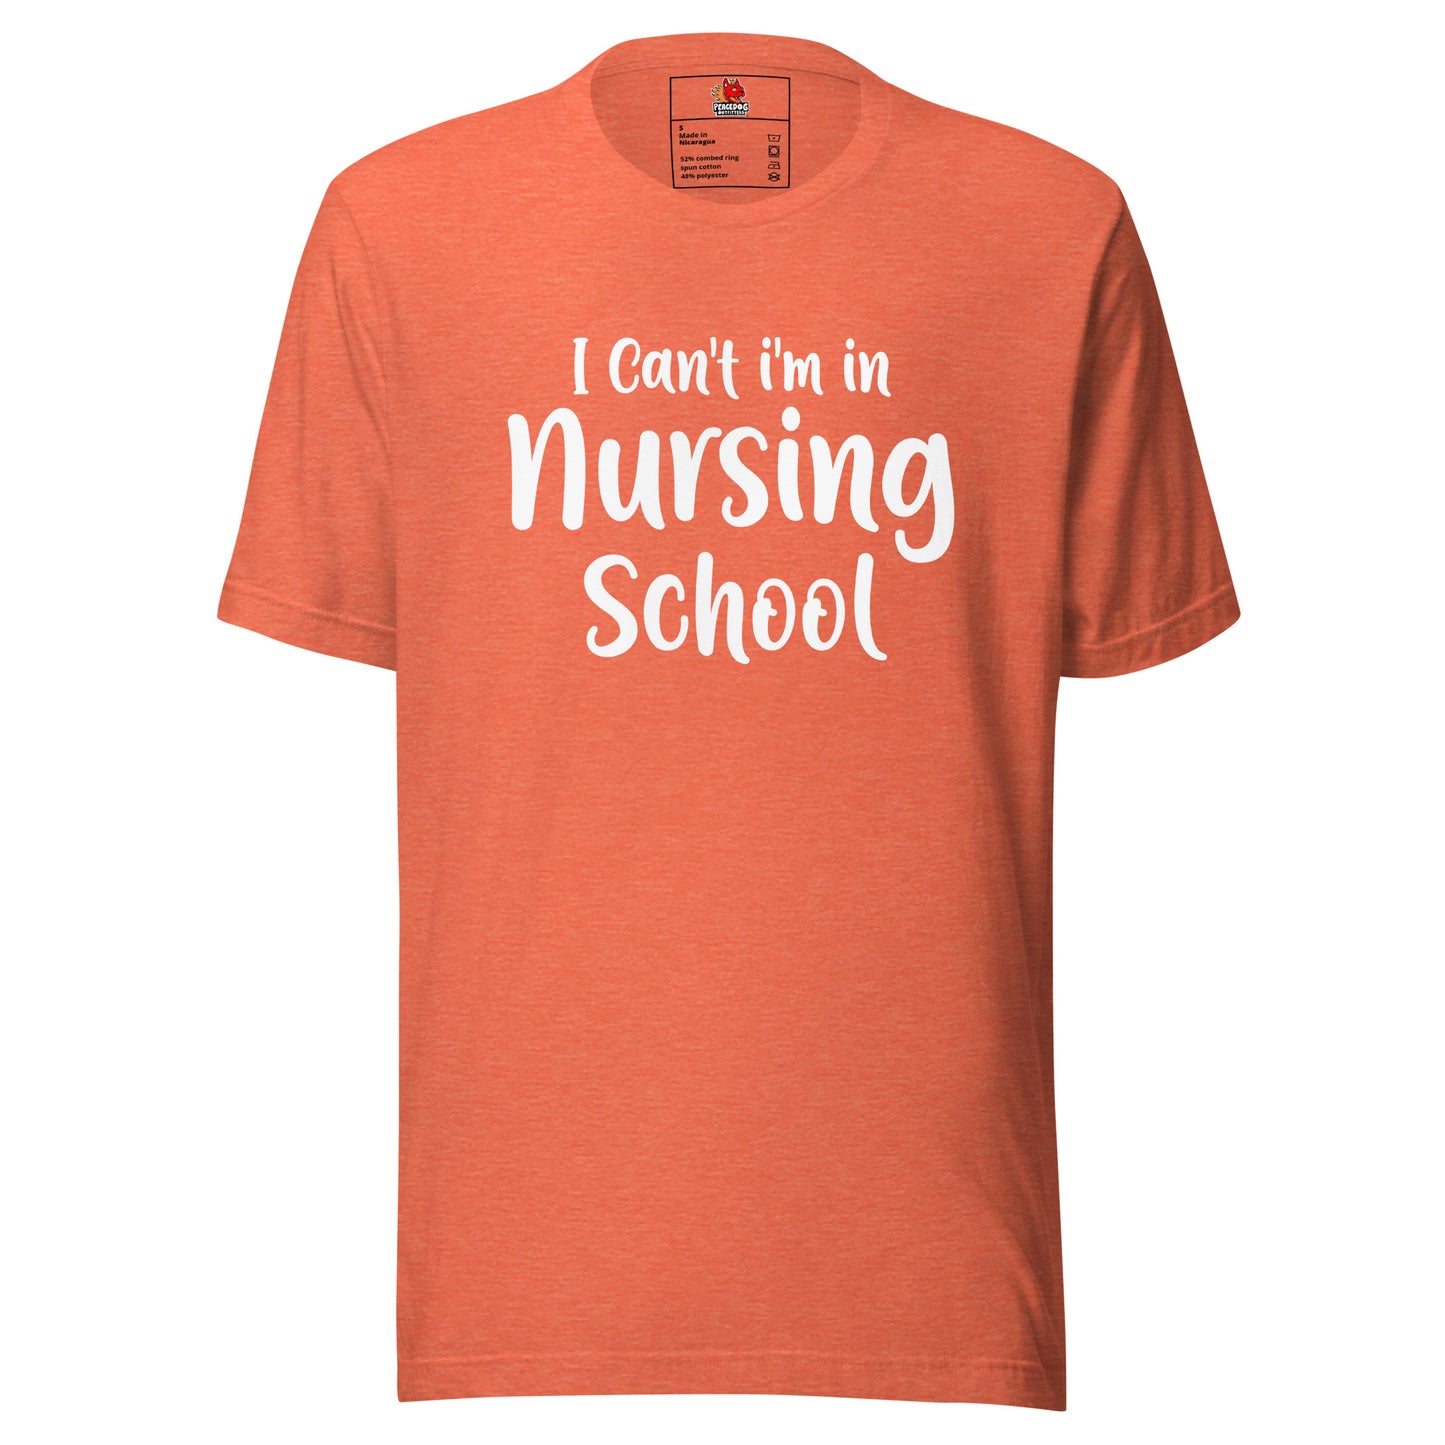 I Can't, I'm in Nursing School T-shirt